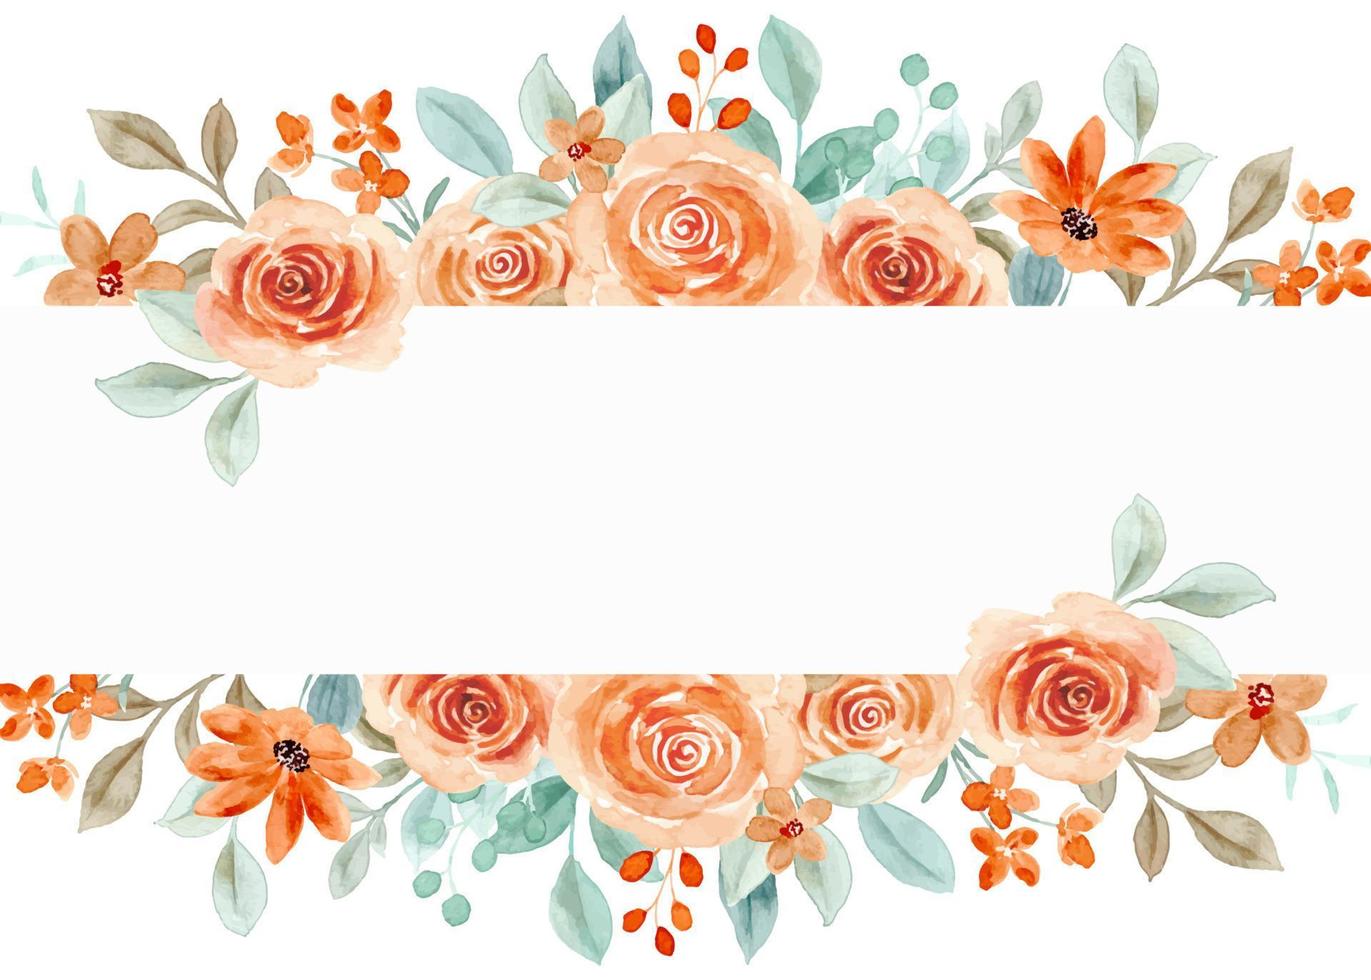 acuarela Rosa flor frontera para boda, cumpleaños, tarjeta, fondo, invitación, fondo de pantalla, pegatina, decoración etc. vector